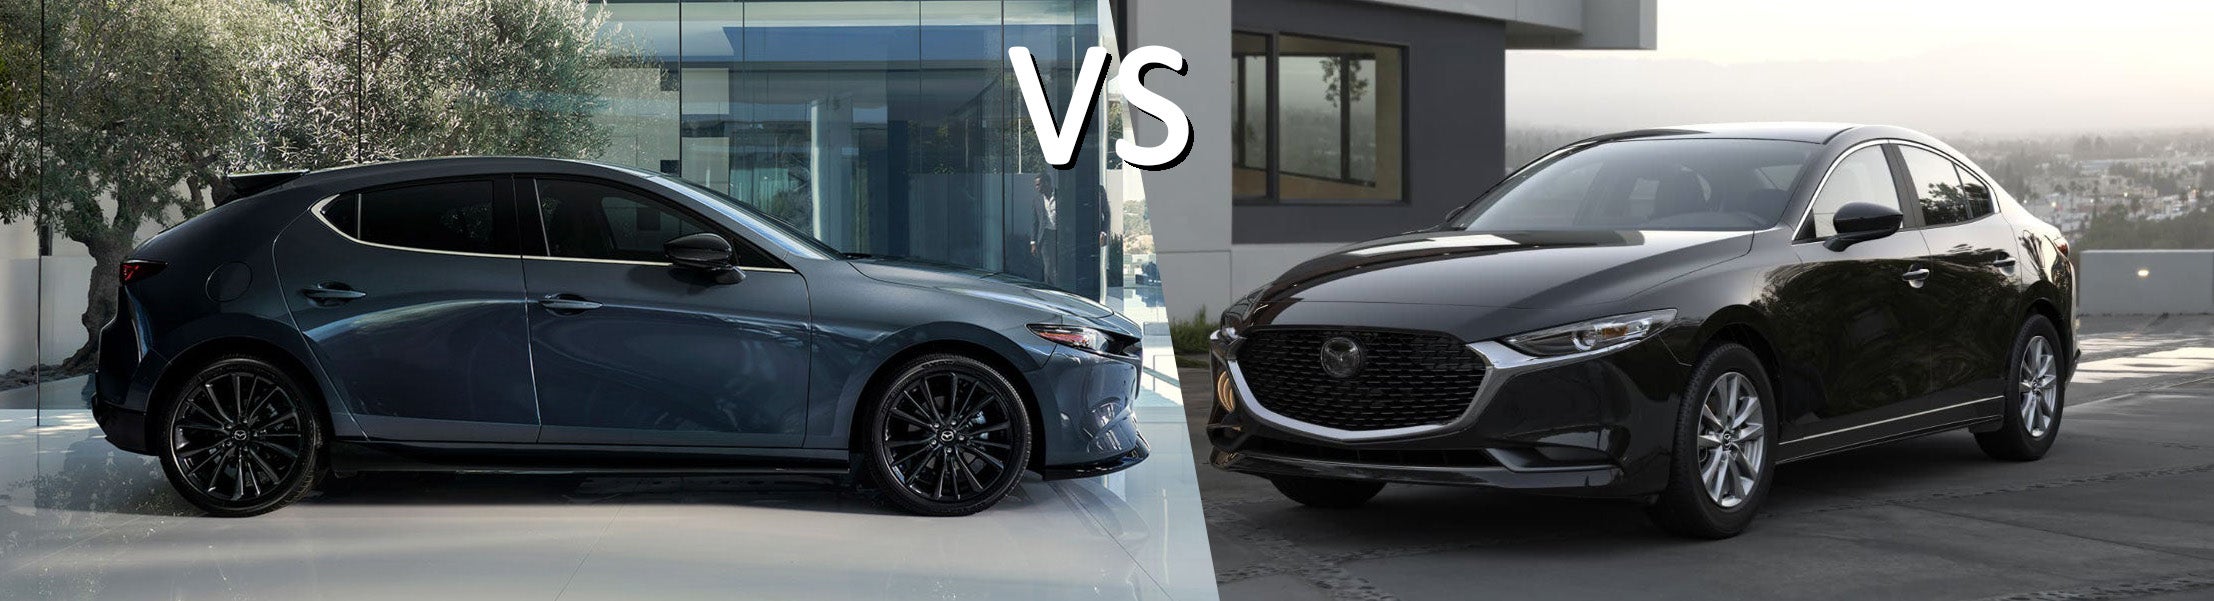 The Mazda3 Sedan and Mazda3 hatchback compared